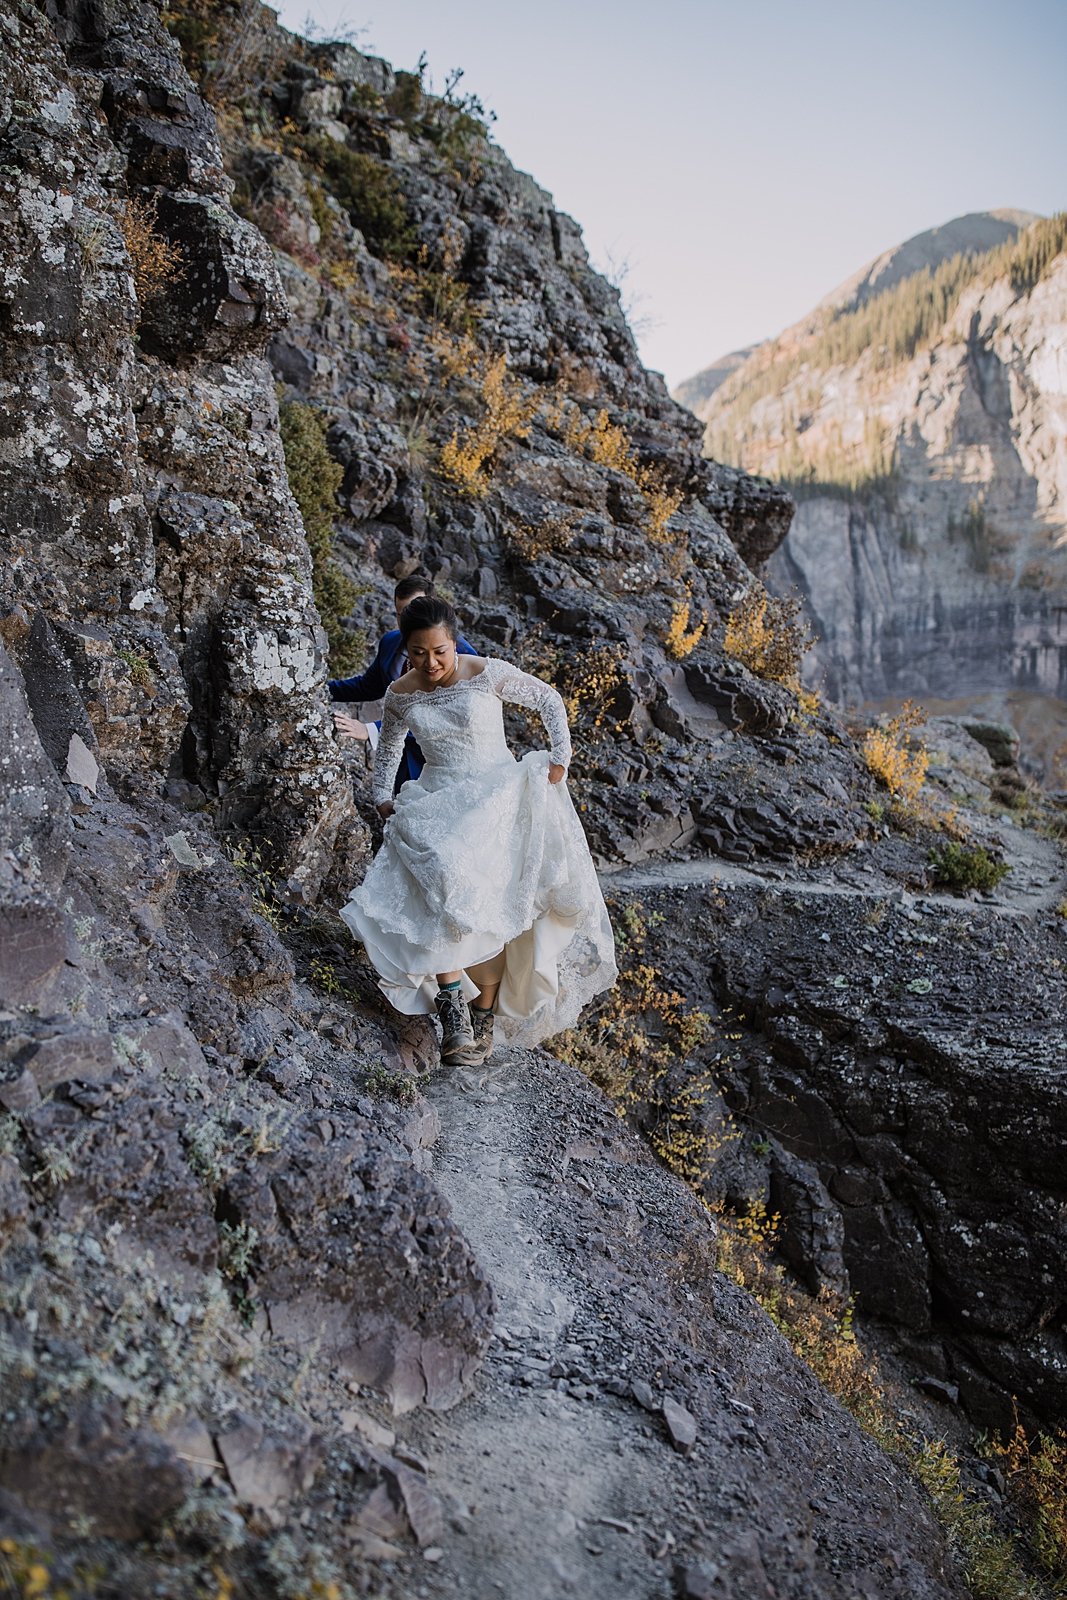 telluride via ferrata in a wedding dress, bride and groom eloping on a cliff edge, high alpine mountaineering elopement, high alpine elopement, southern colorado hiking elopement, climbing couple